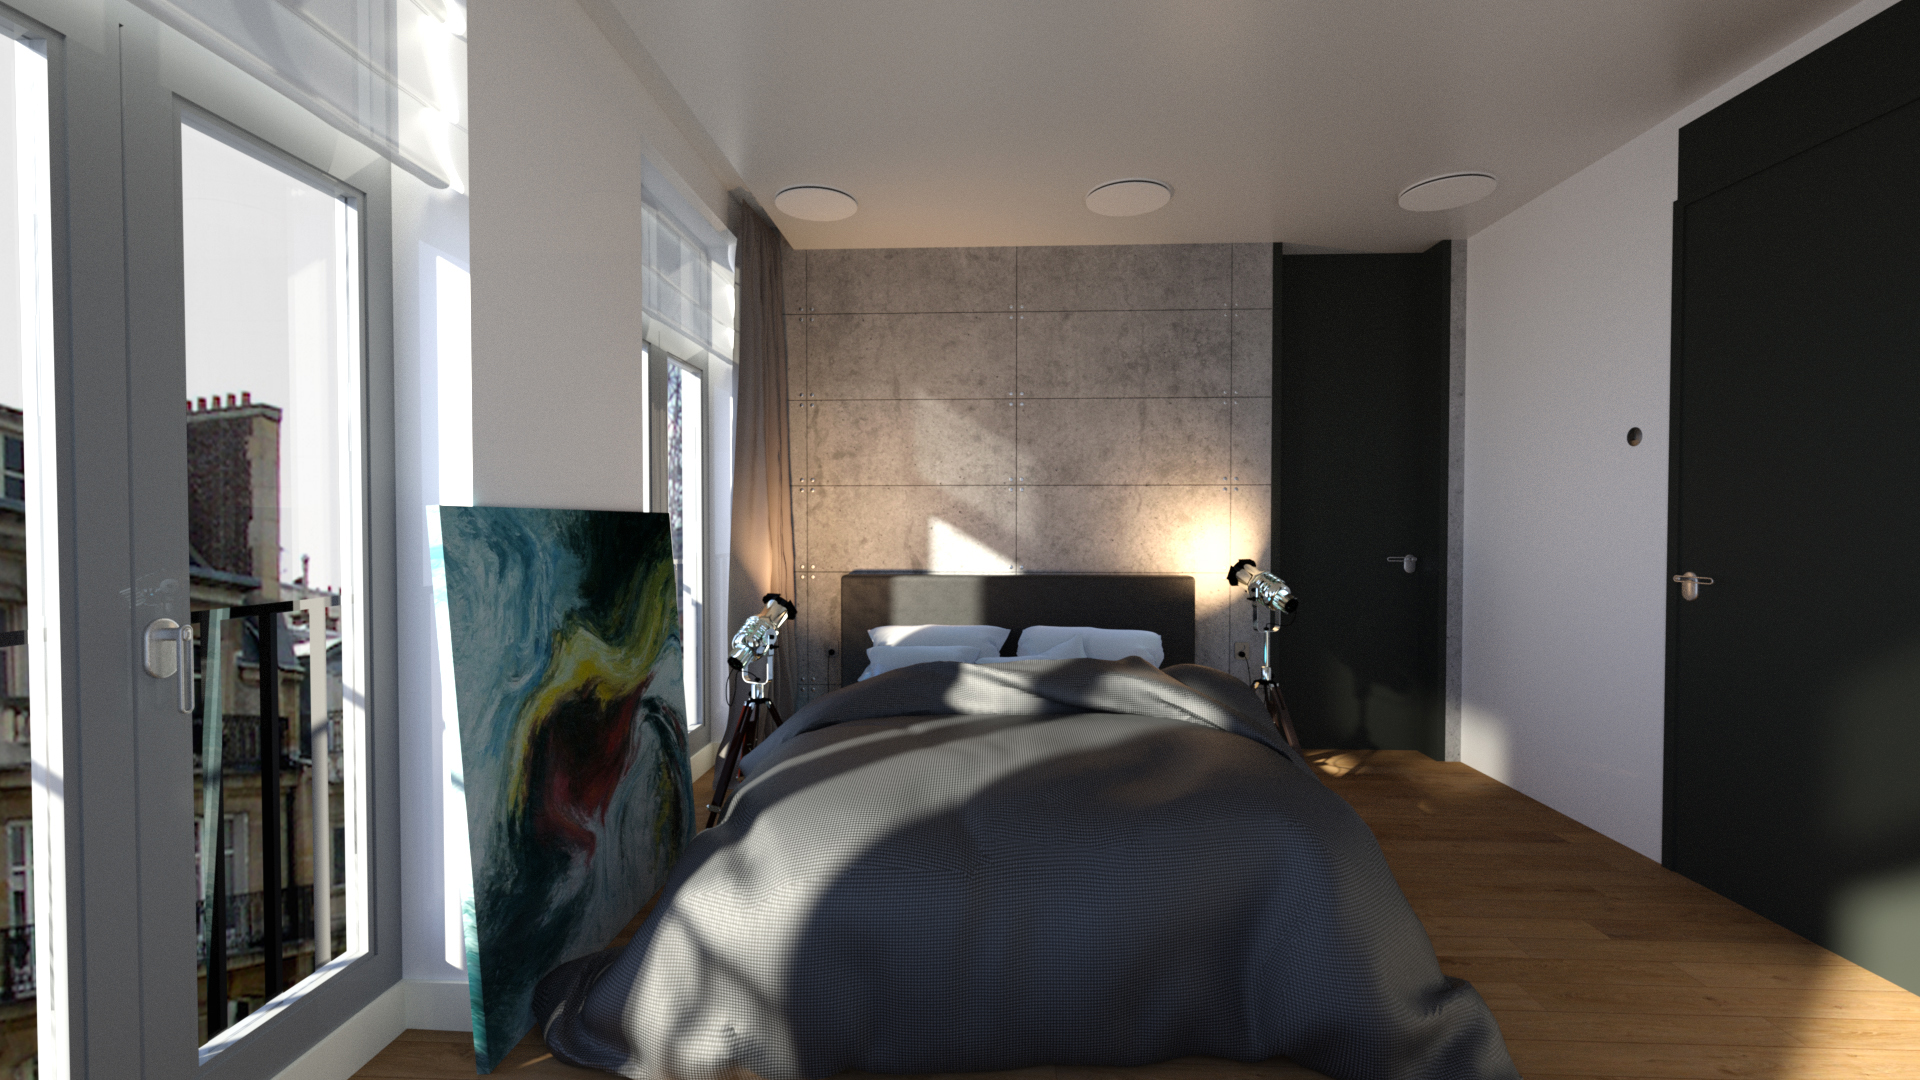 Bachelor's Bedroom by: Digitallab3D, 3D Models by Daz 3D